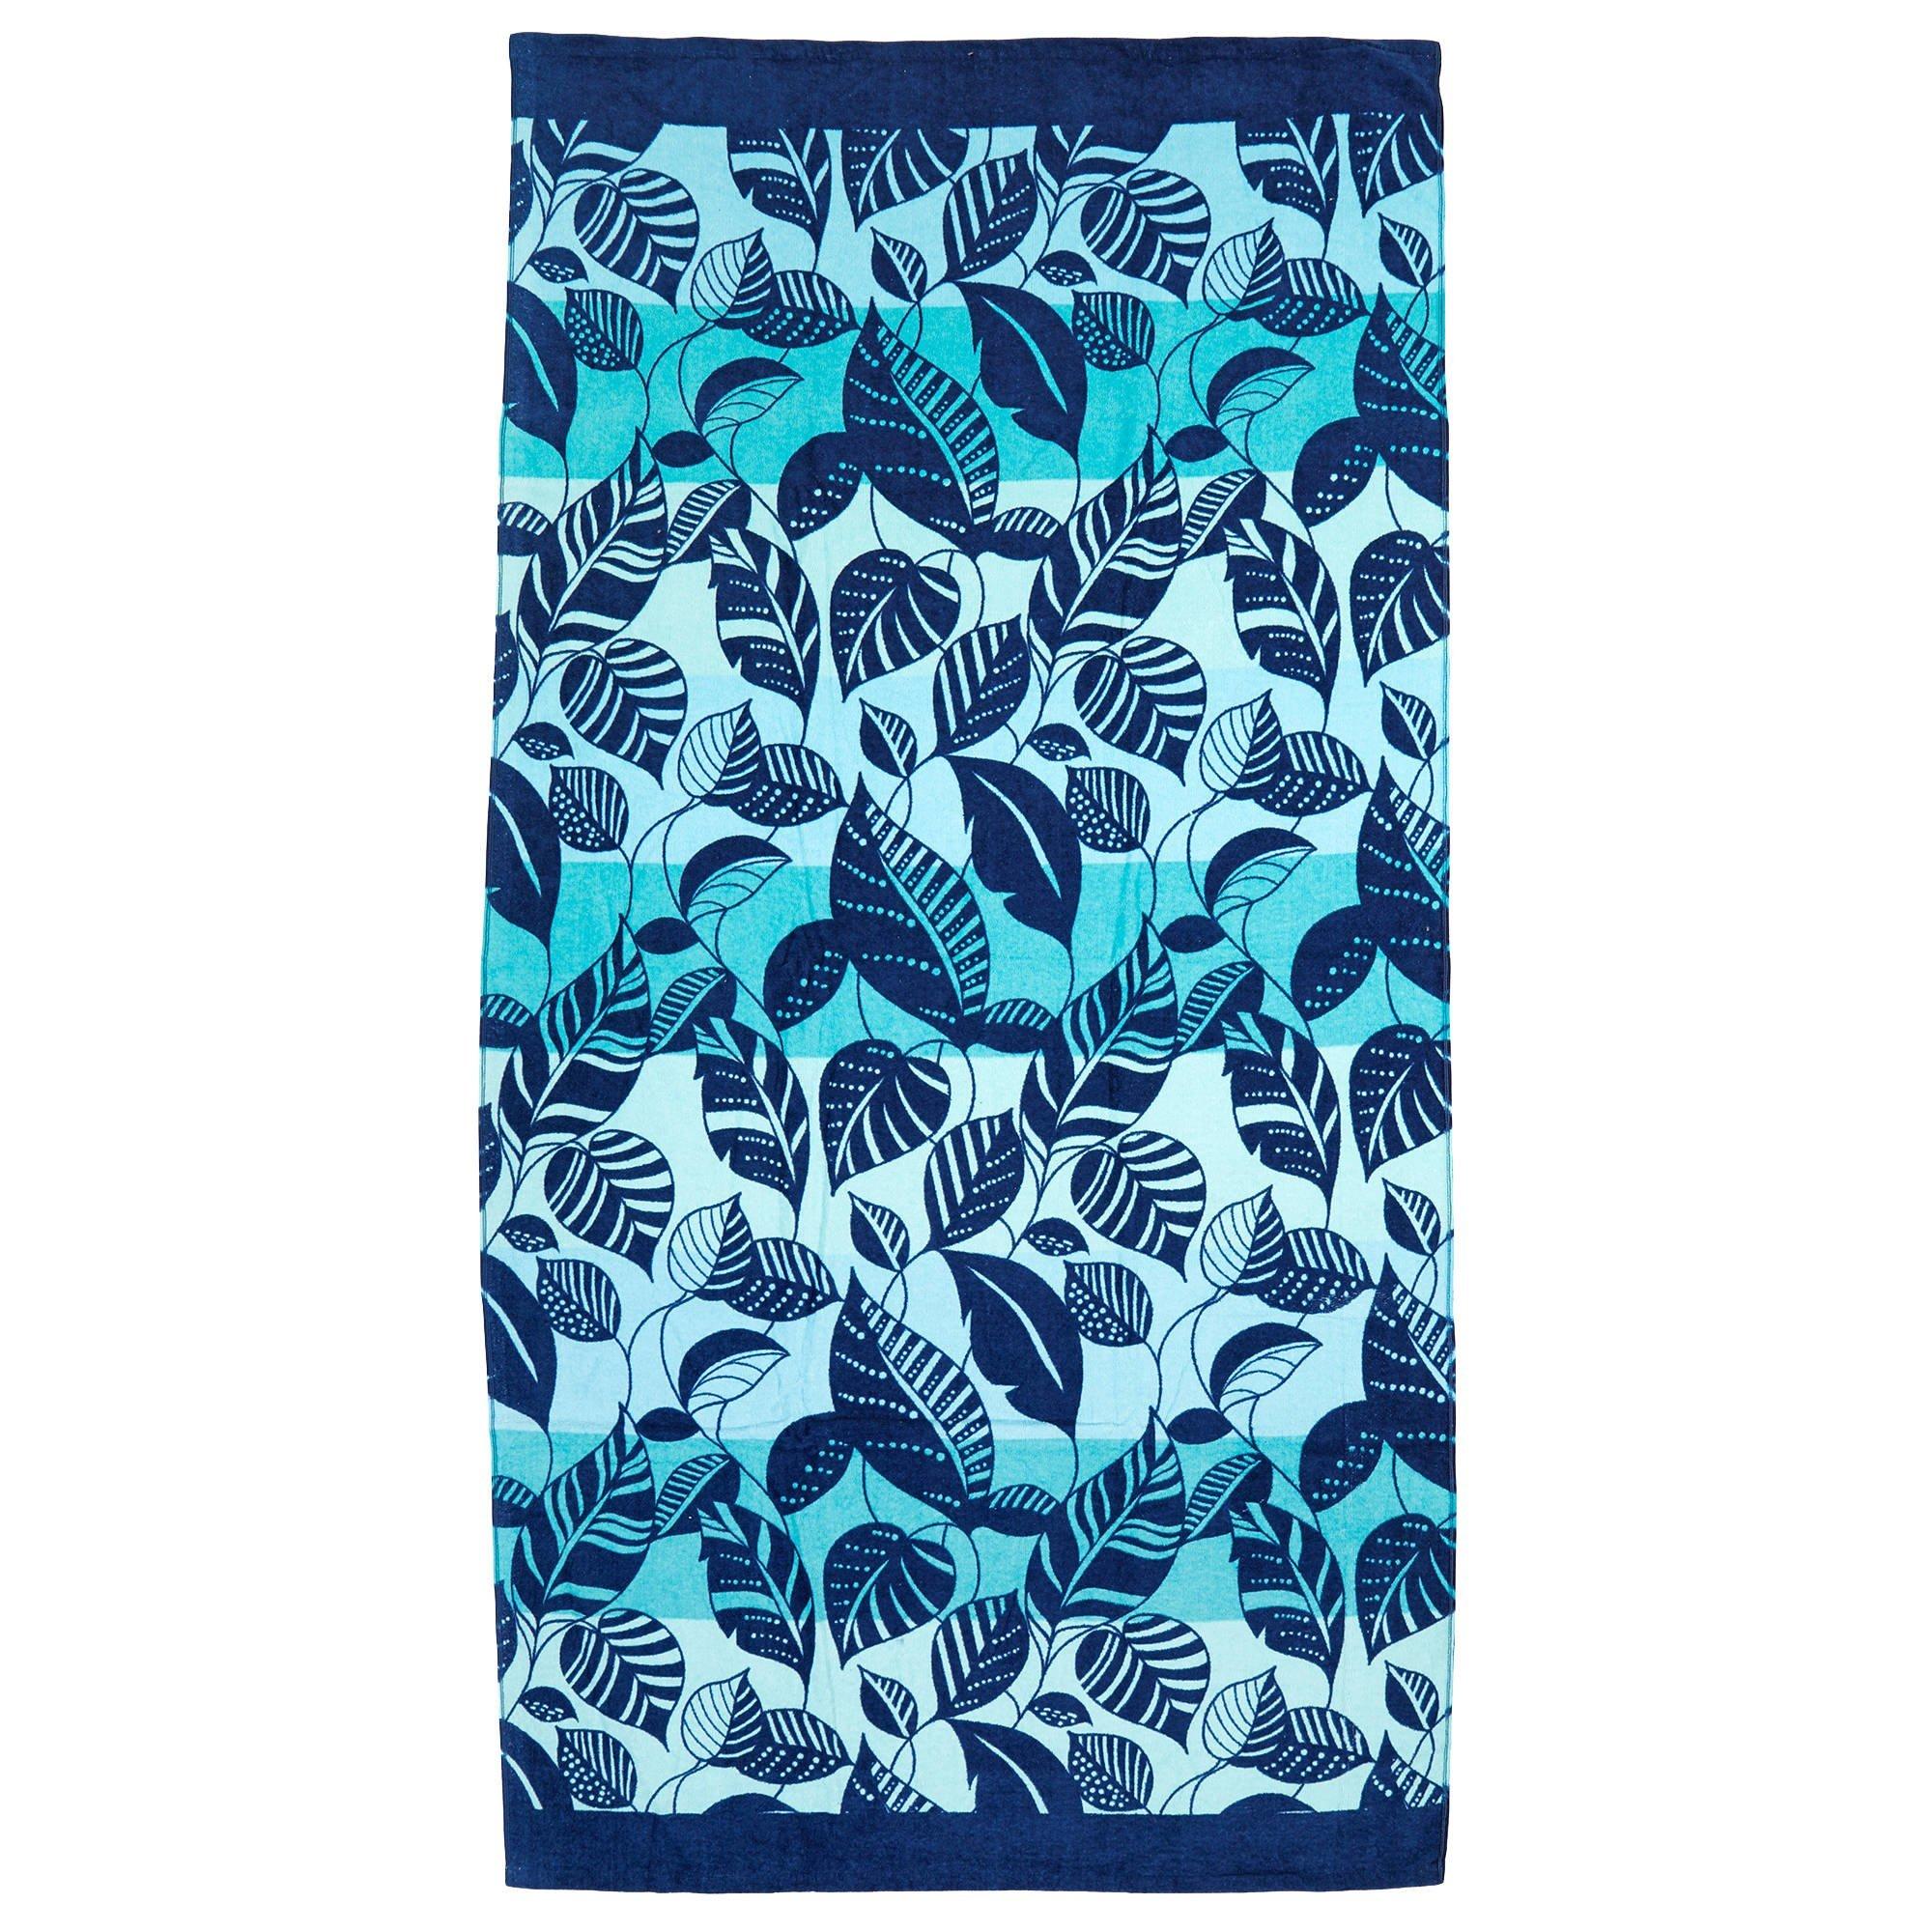 Leaf Print Beach Towel - Multi | Burkes Outlet